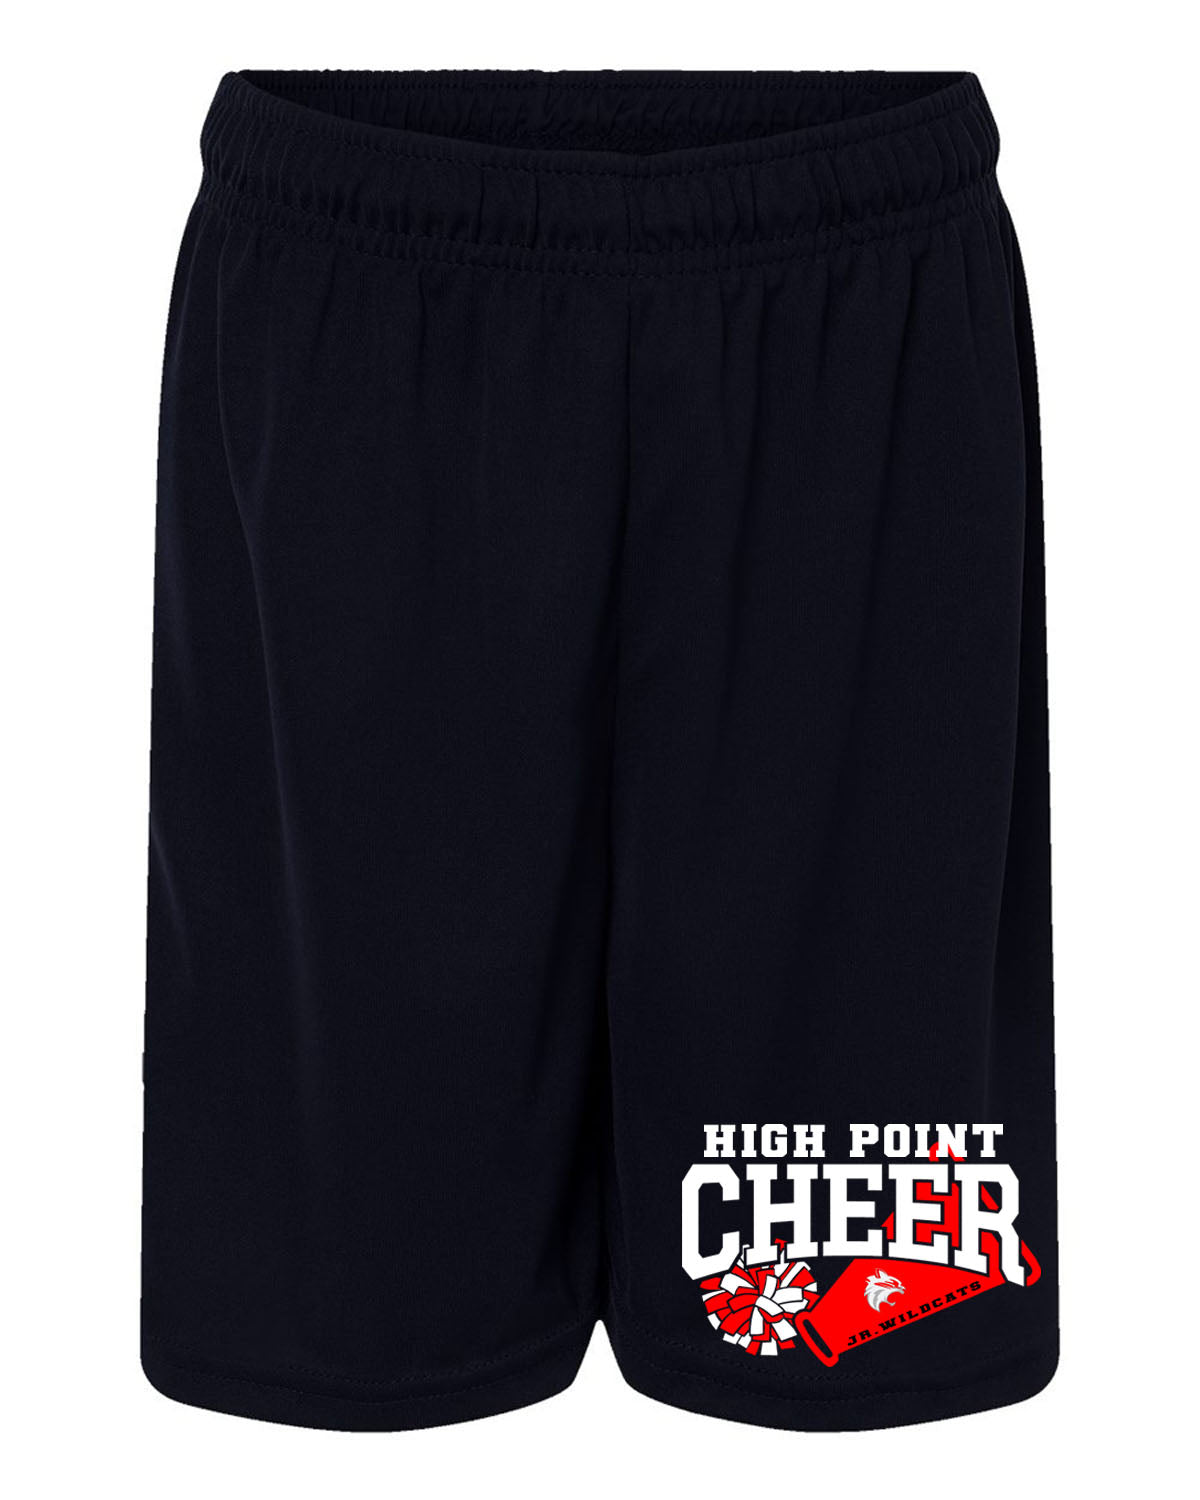 High Point Cheer Design 1 Performance Shorts